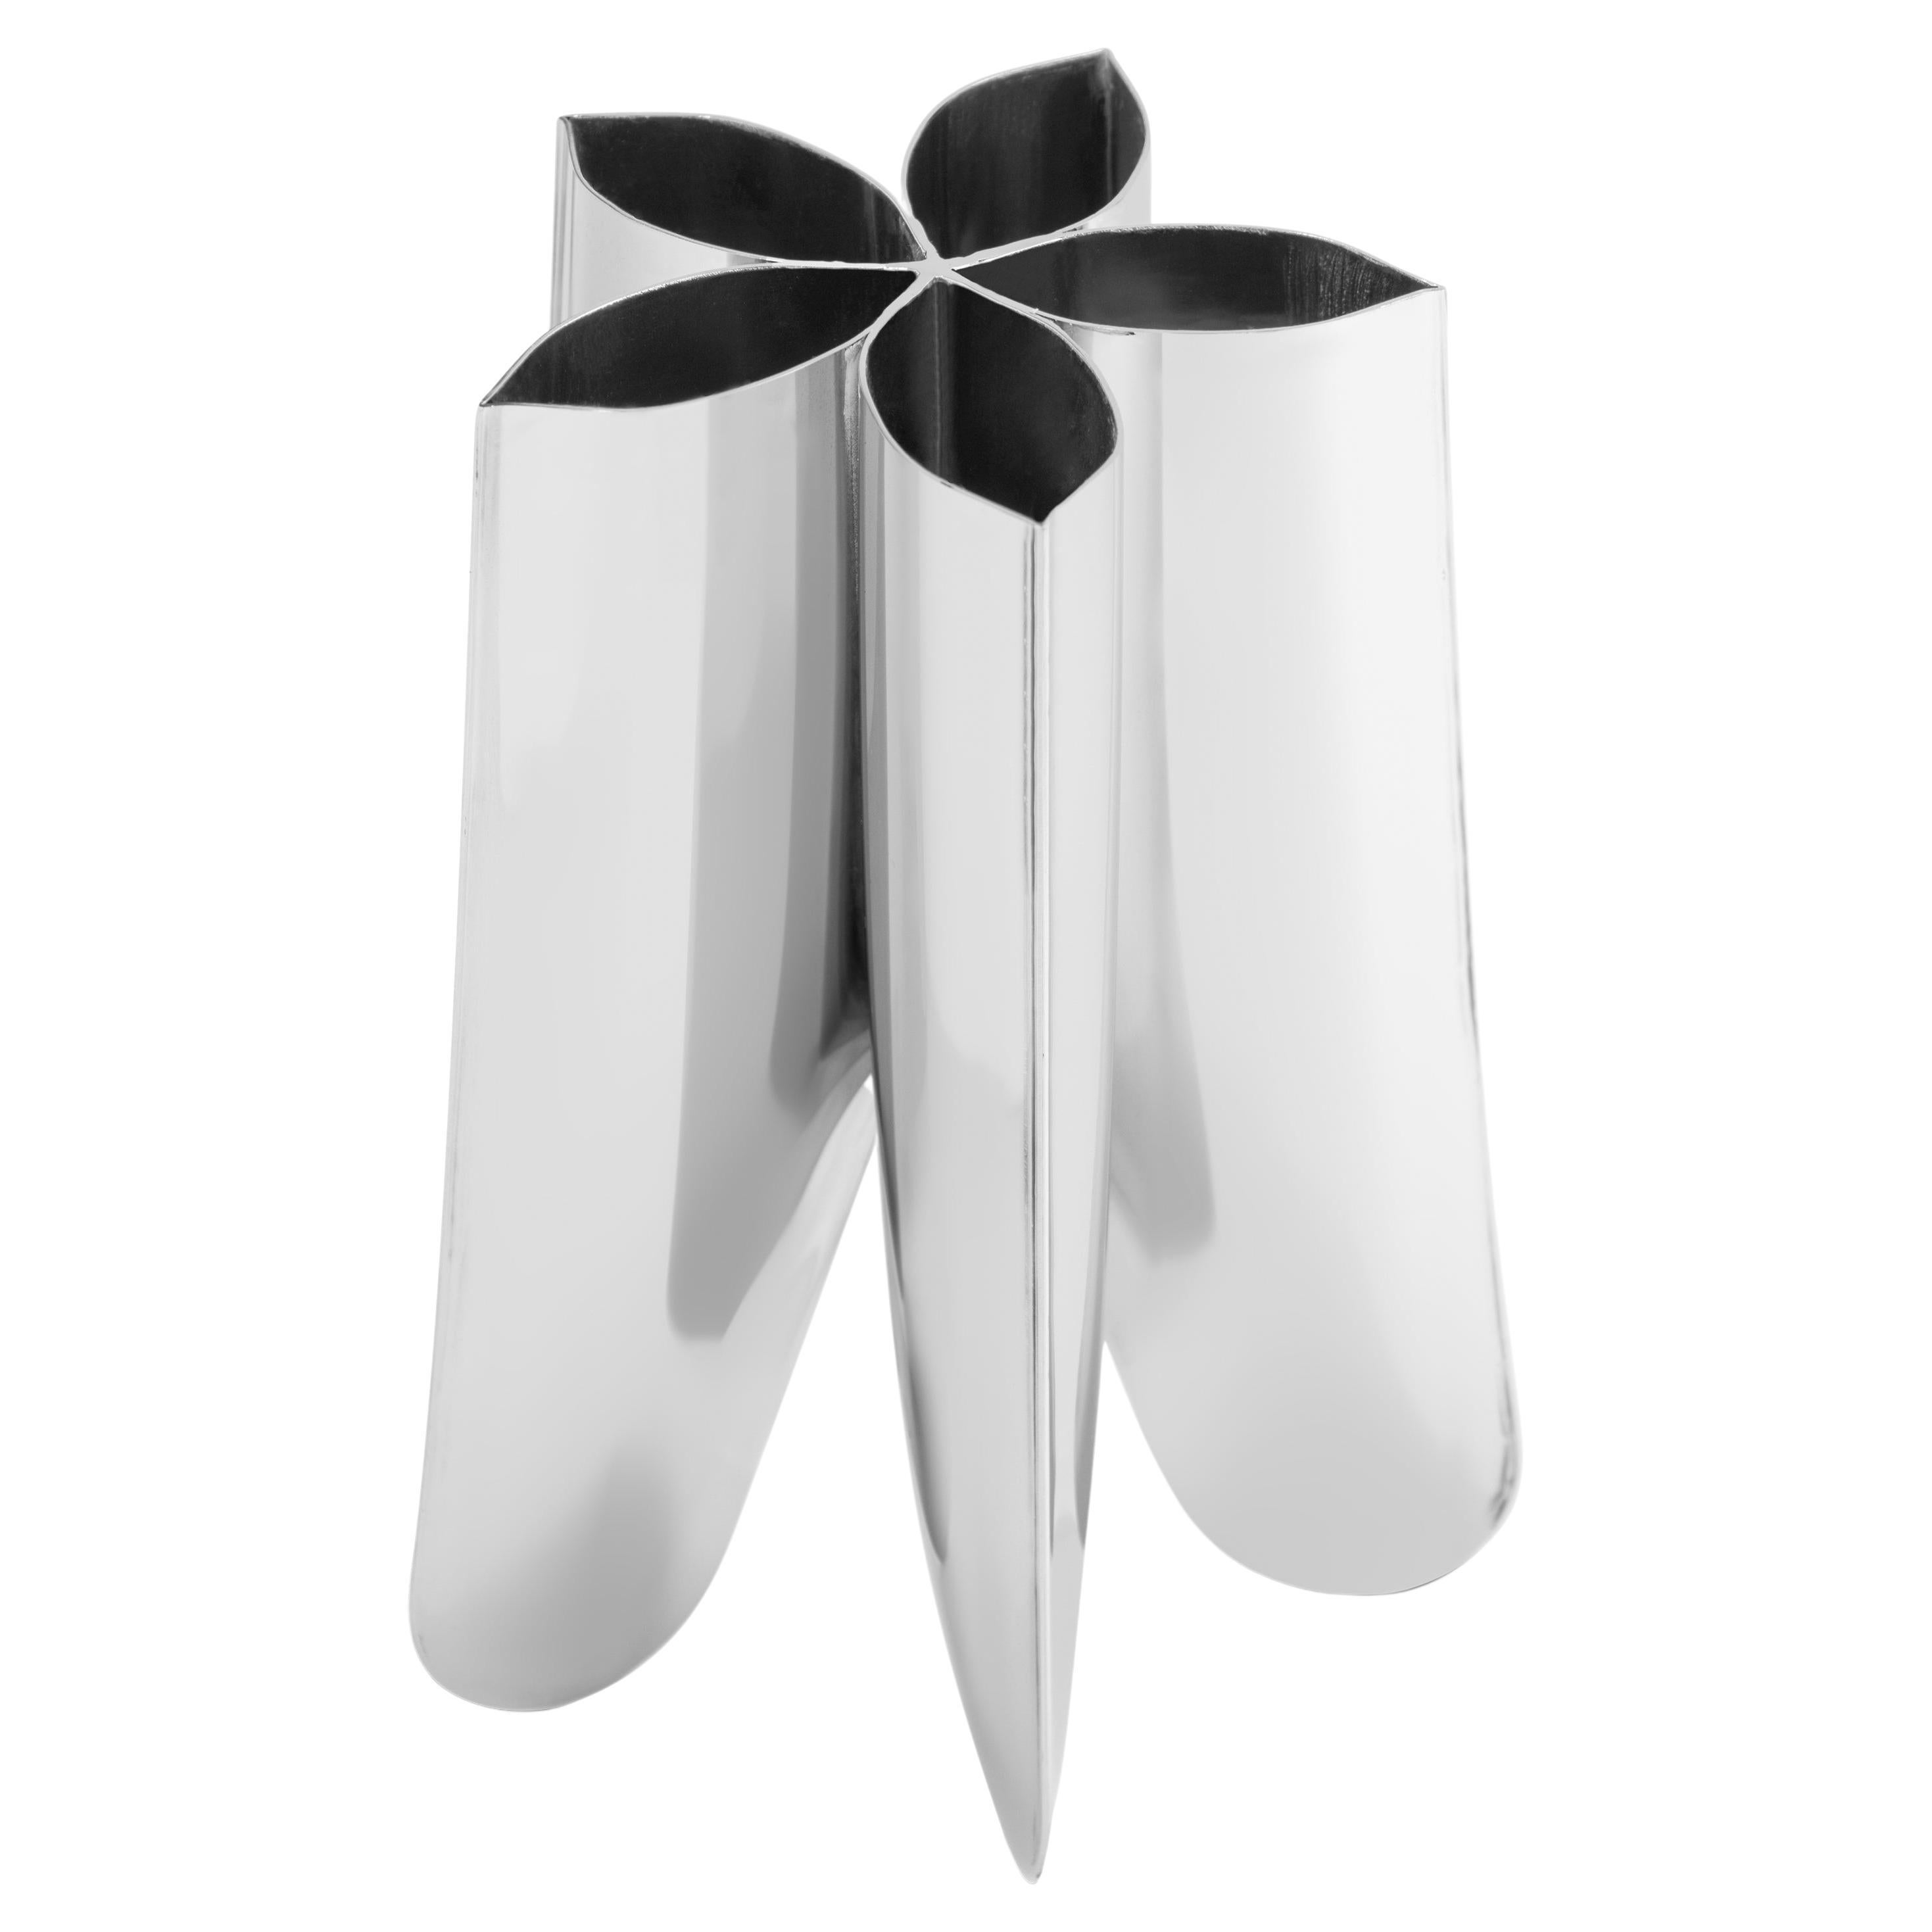 Contemporary Vase, 'Rotation Vase' by Zieta, Medium, Stainless Steel